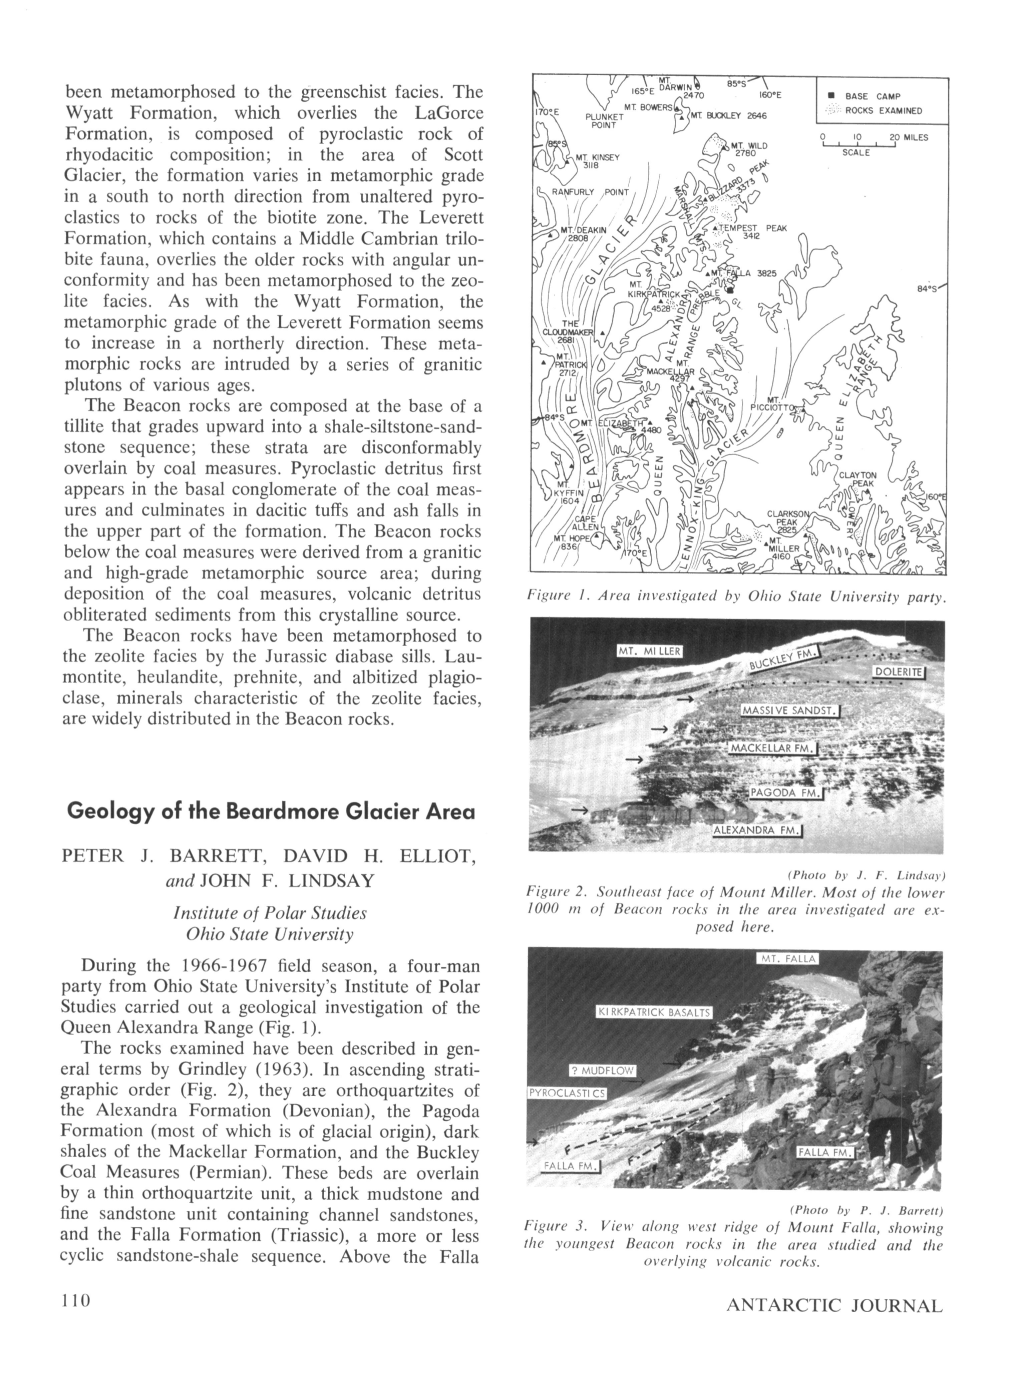 Geology of the Beardmore Glacier Area ALEXAMDRA FM.I PETER J